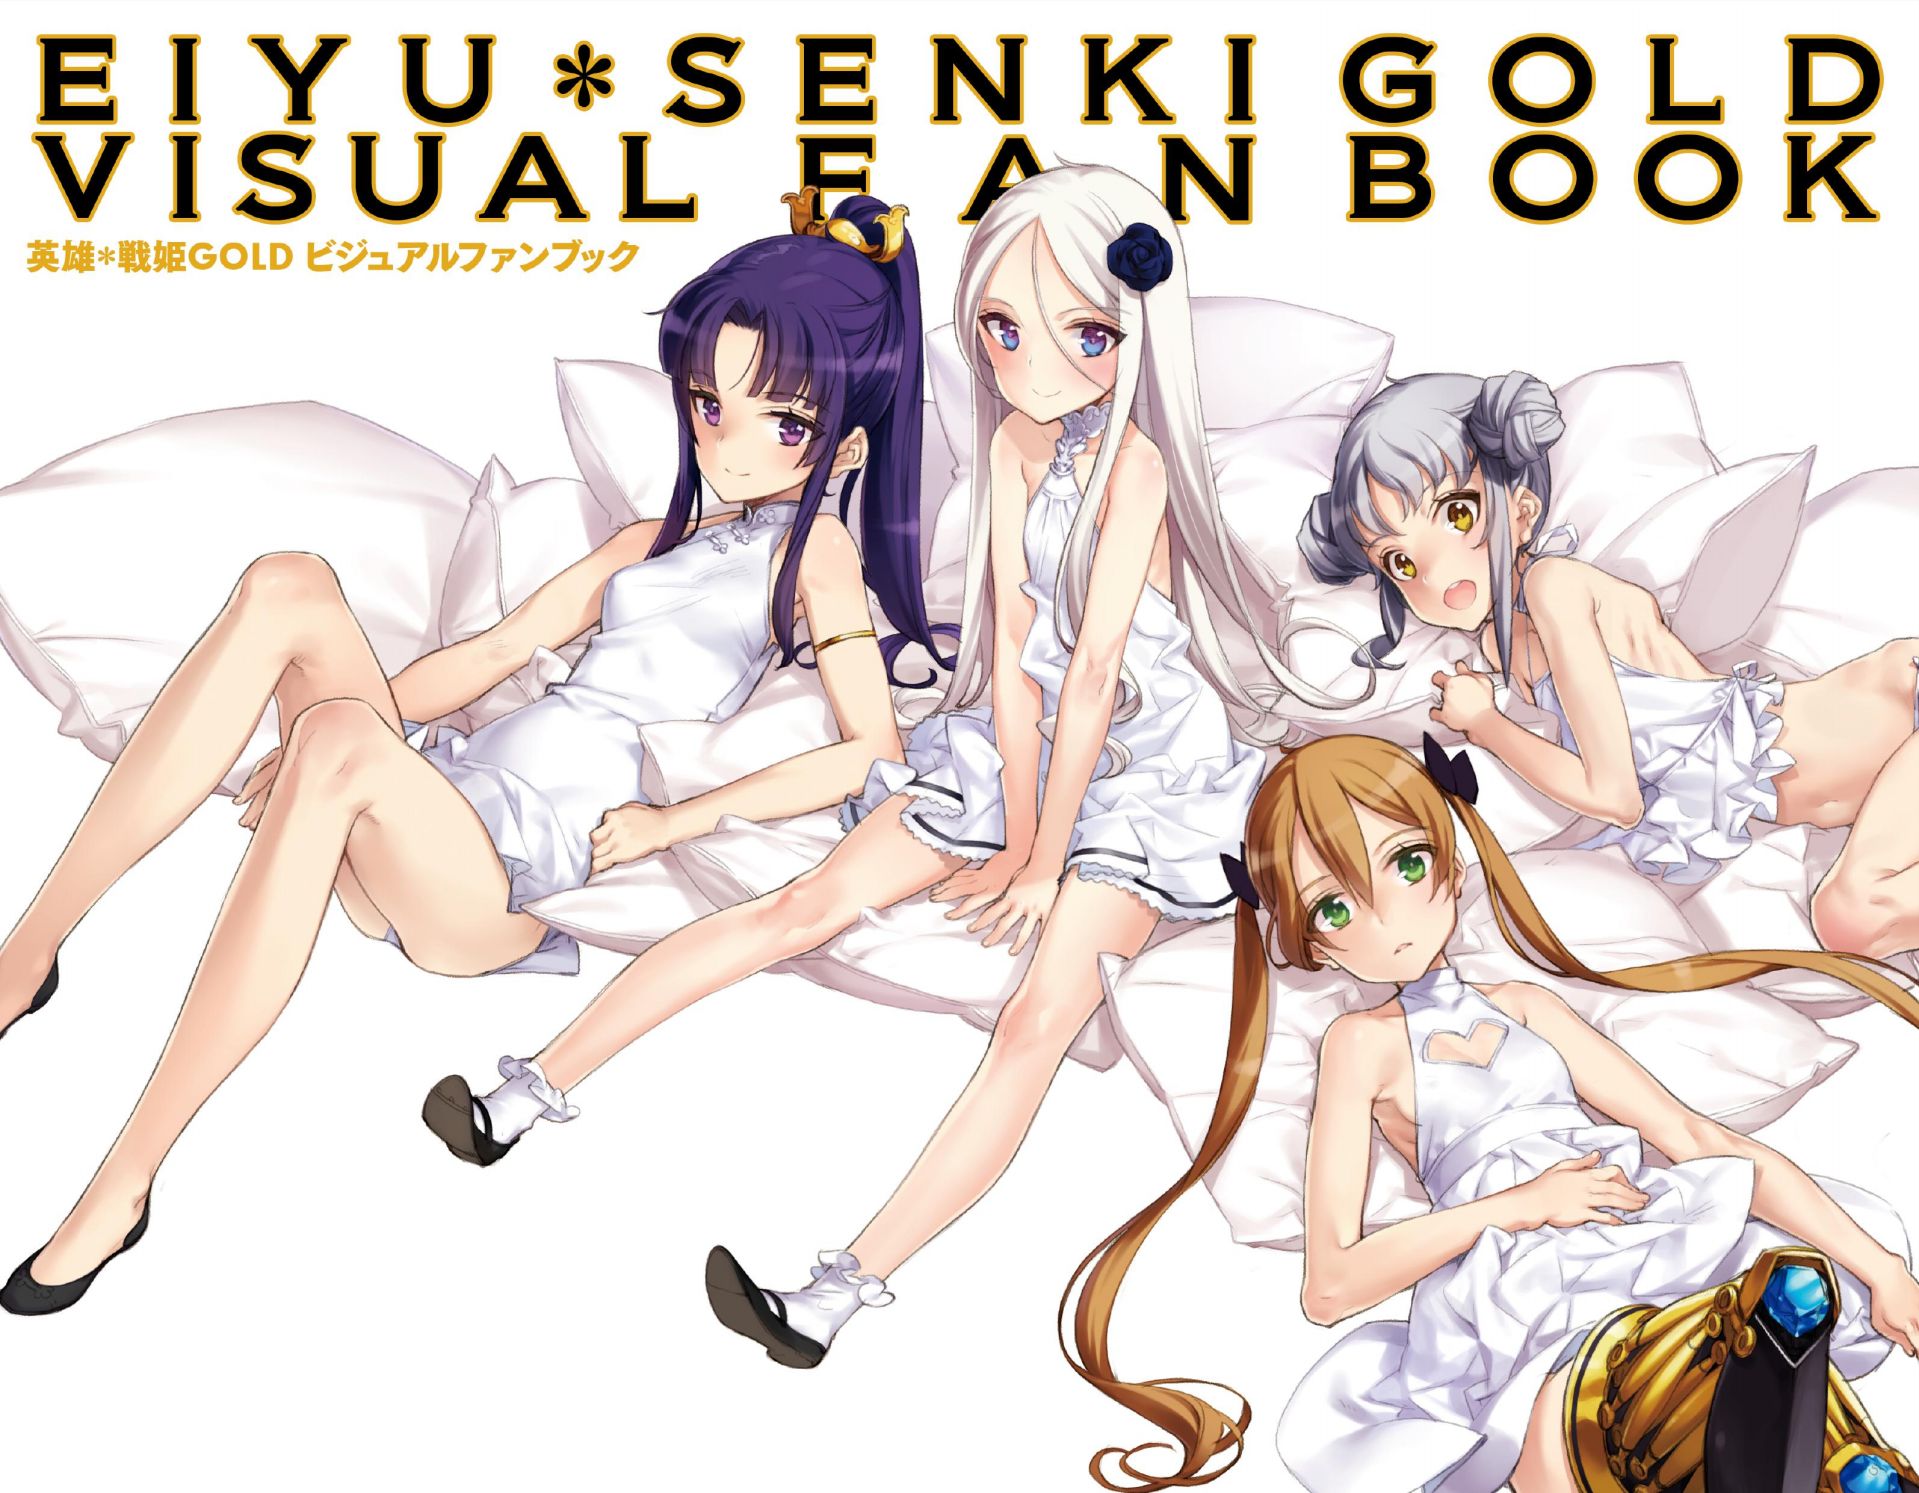 Eiyuu Senki GOLD Visual Fanbook VOL.1